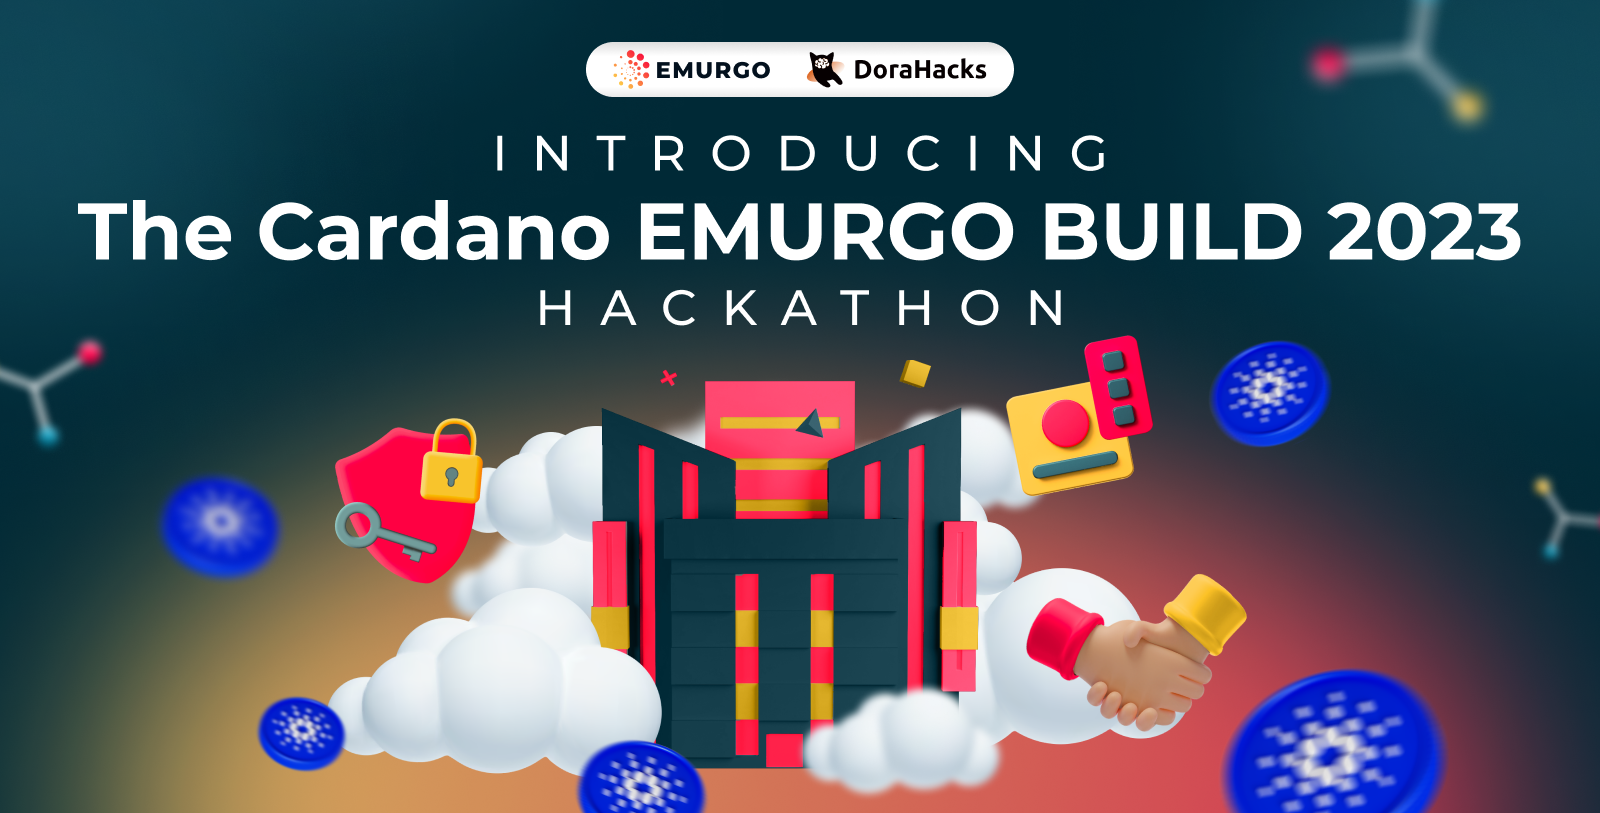 Introducing the Cardano EMURGO BUILD 2023 Hackathon